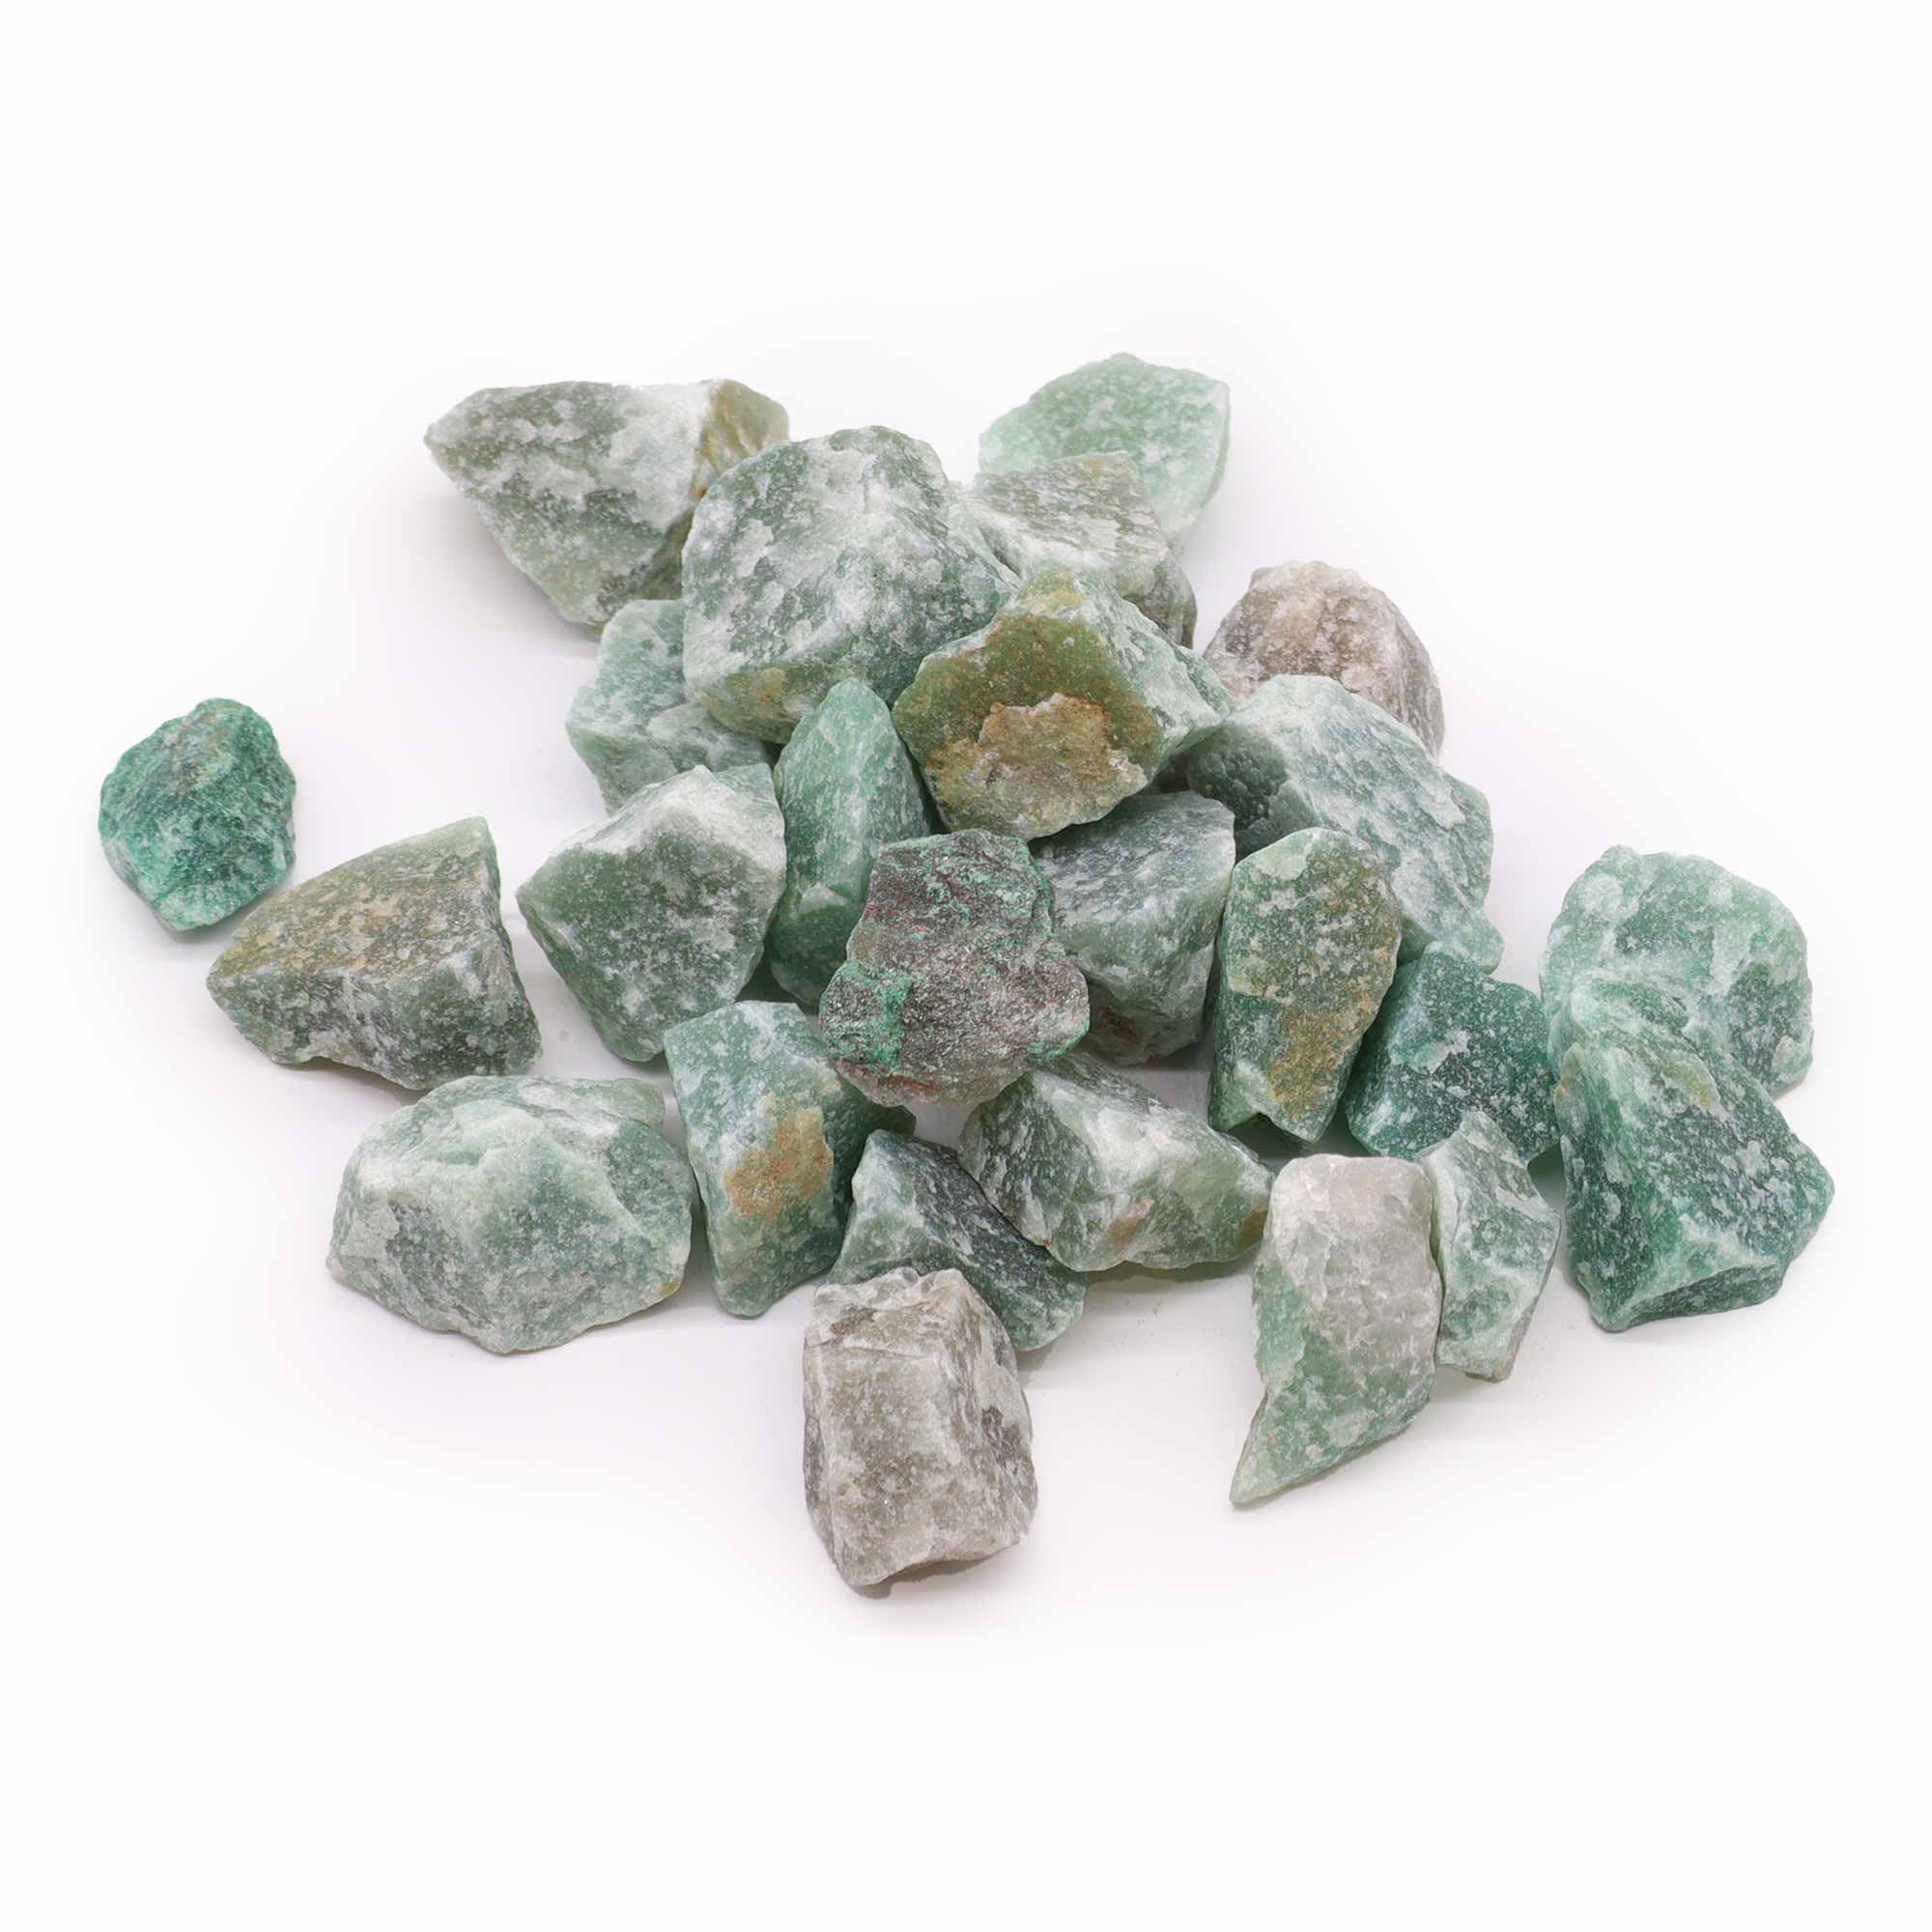 View Raw Crystals 500gm Crystal Jade information